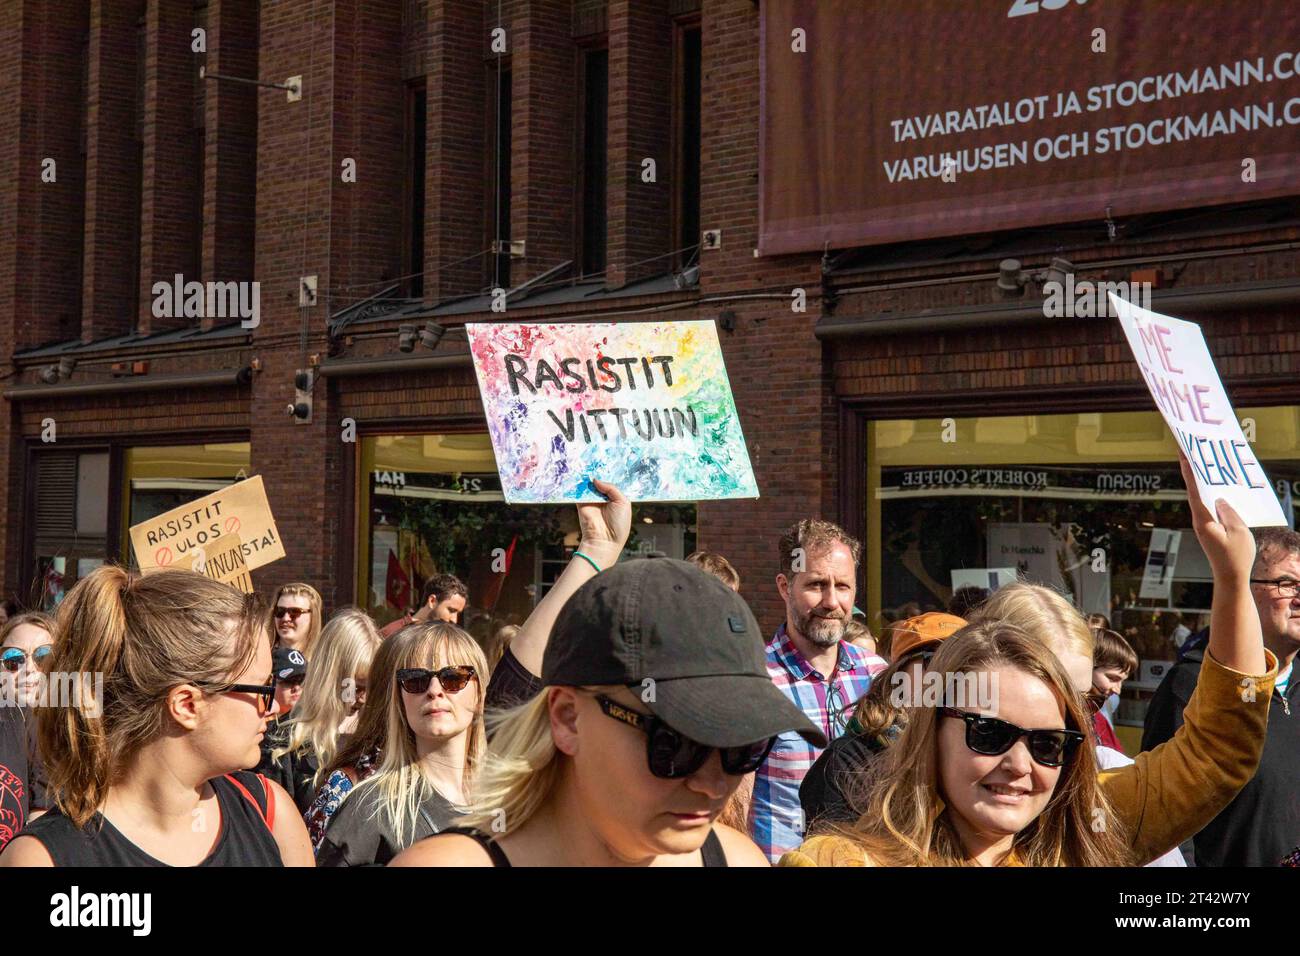 Rasistit vittuun. Colorful handmade sign at Me emme vaikene! anti-racism demonstration in Helsinki, Finland. Stock Photo